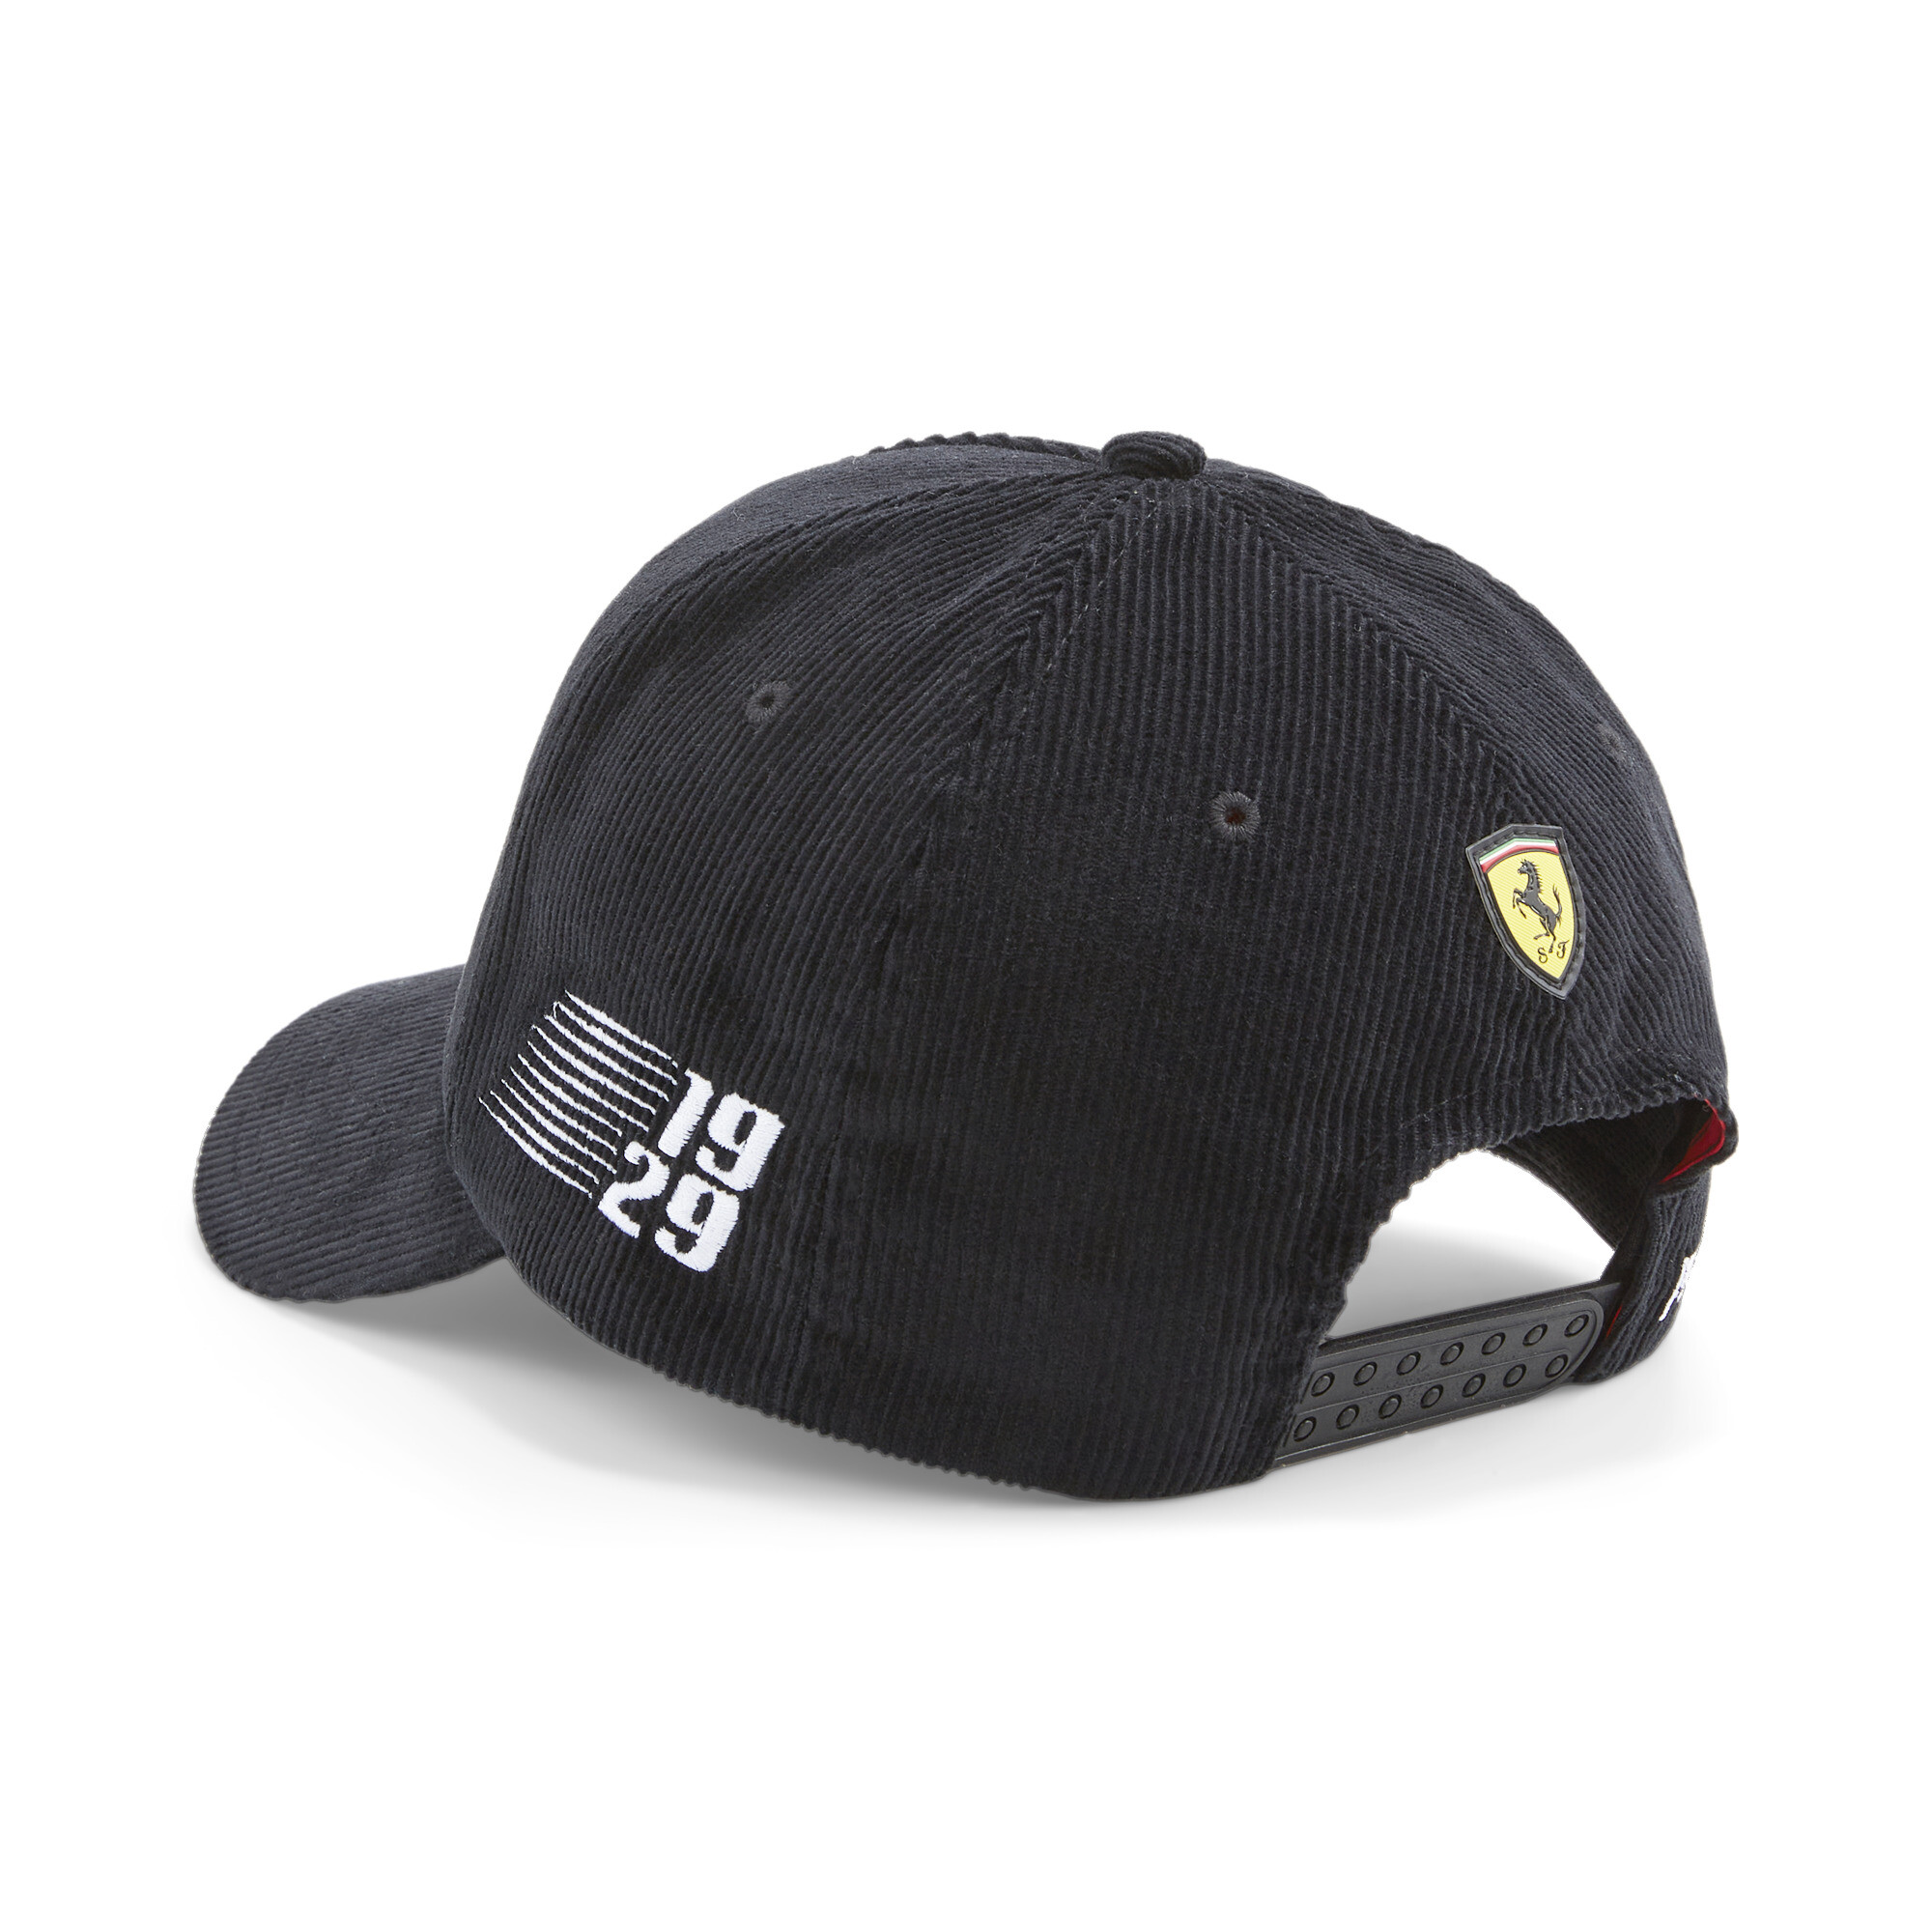 Men's PUMA Scuderia Ferrari Garage Crew Baseball Cap In Black, Size Adult